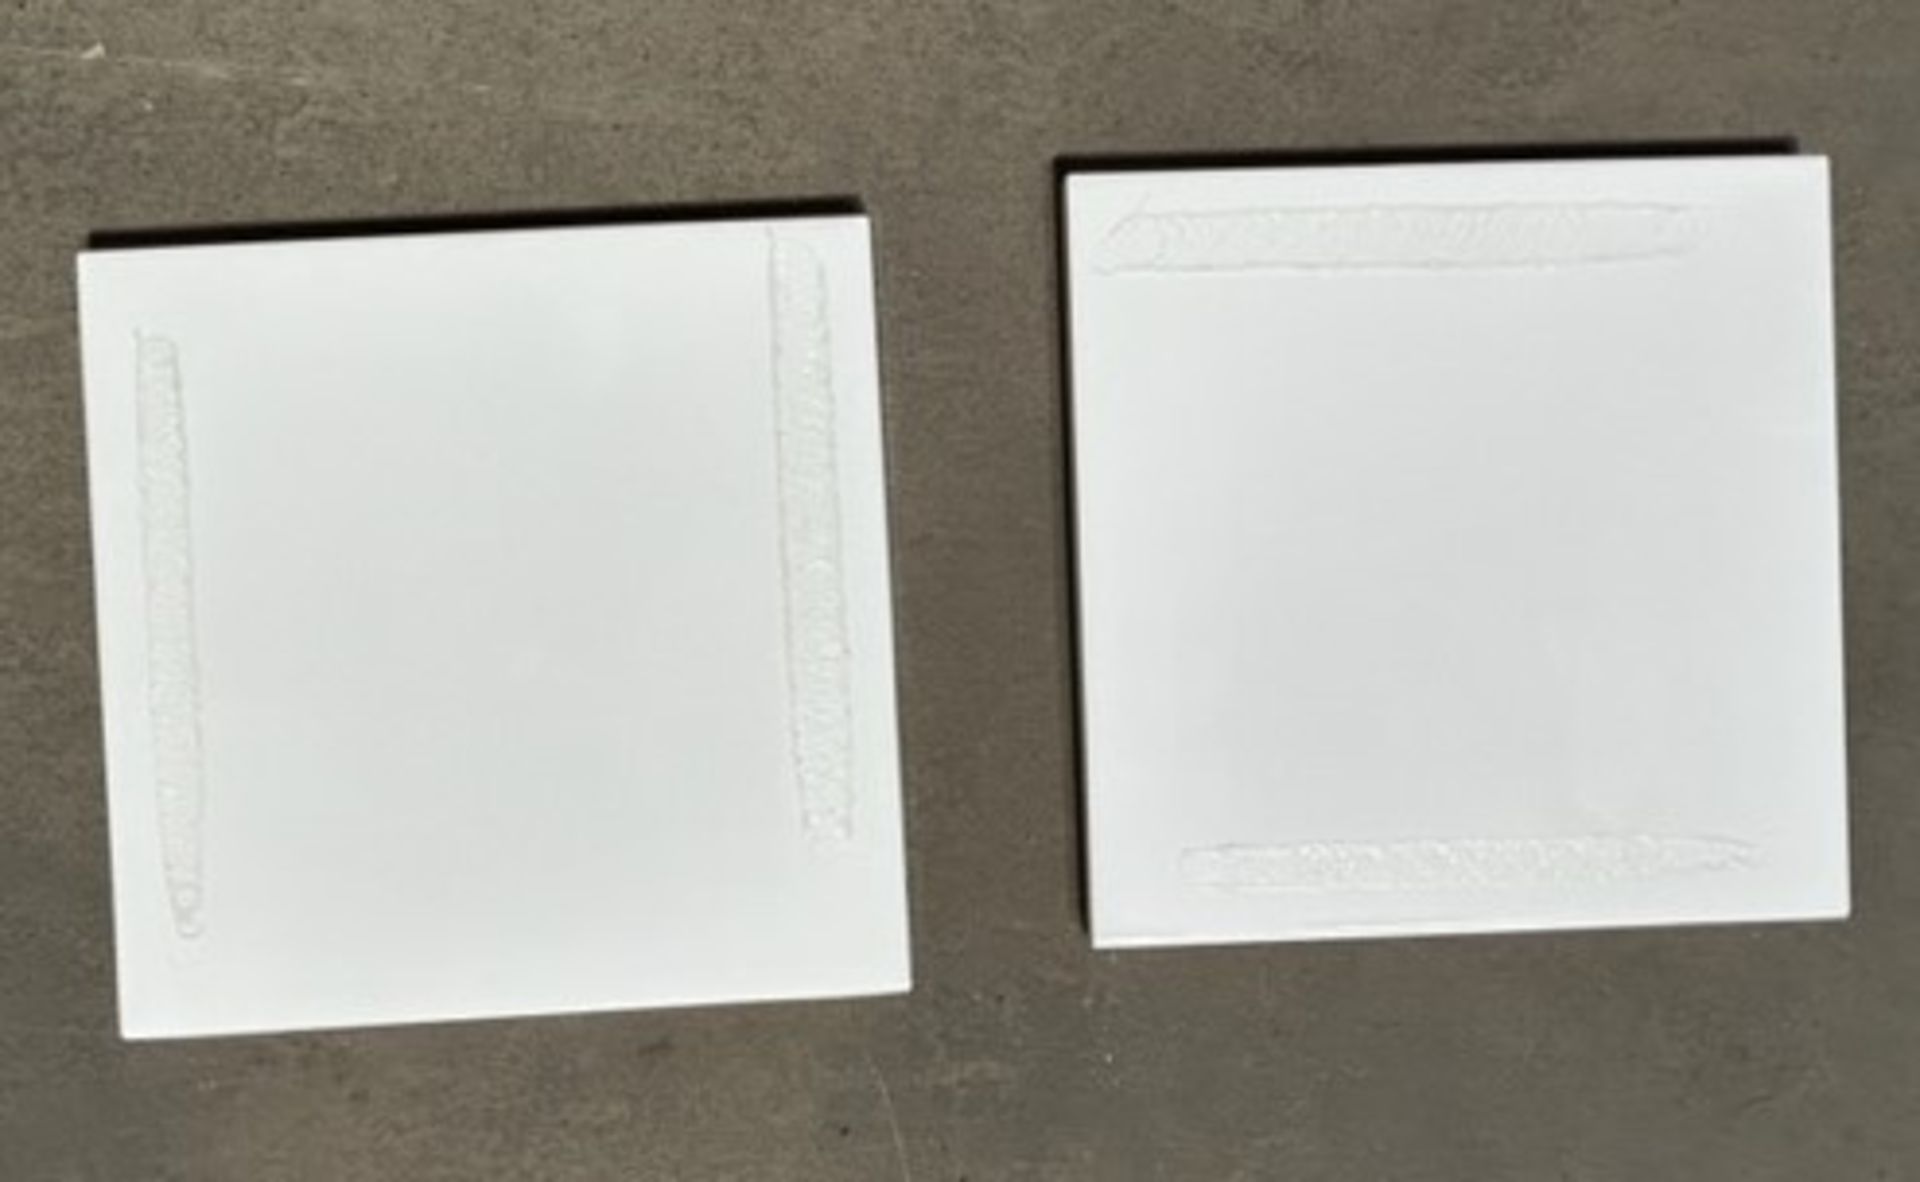 (550) Square Feet, Fondo Visione Classica Light Celery, 3" x 6", Wall Tiles